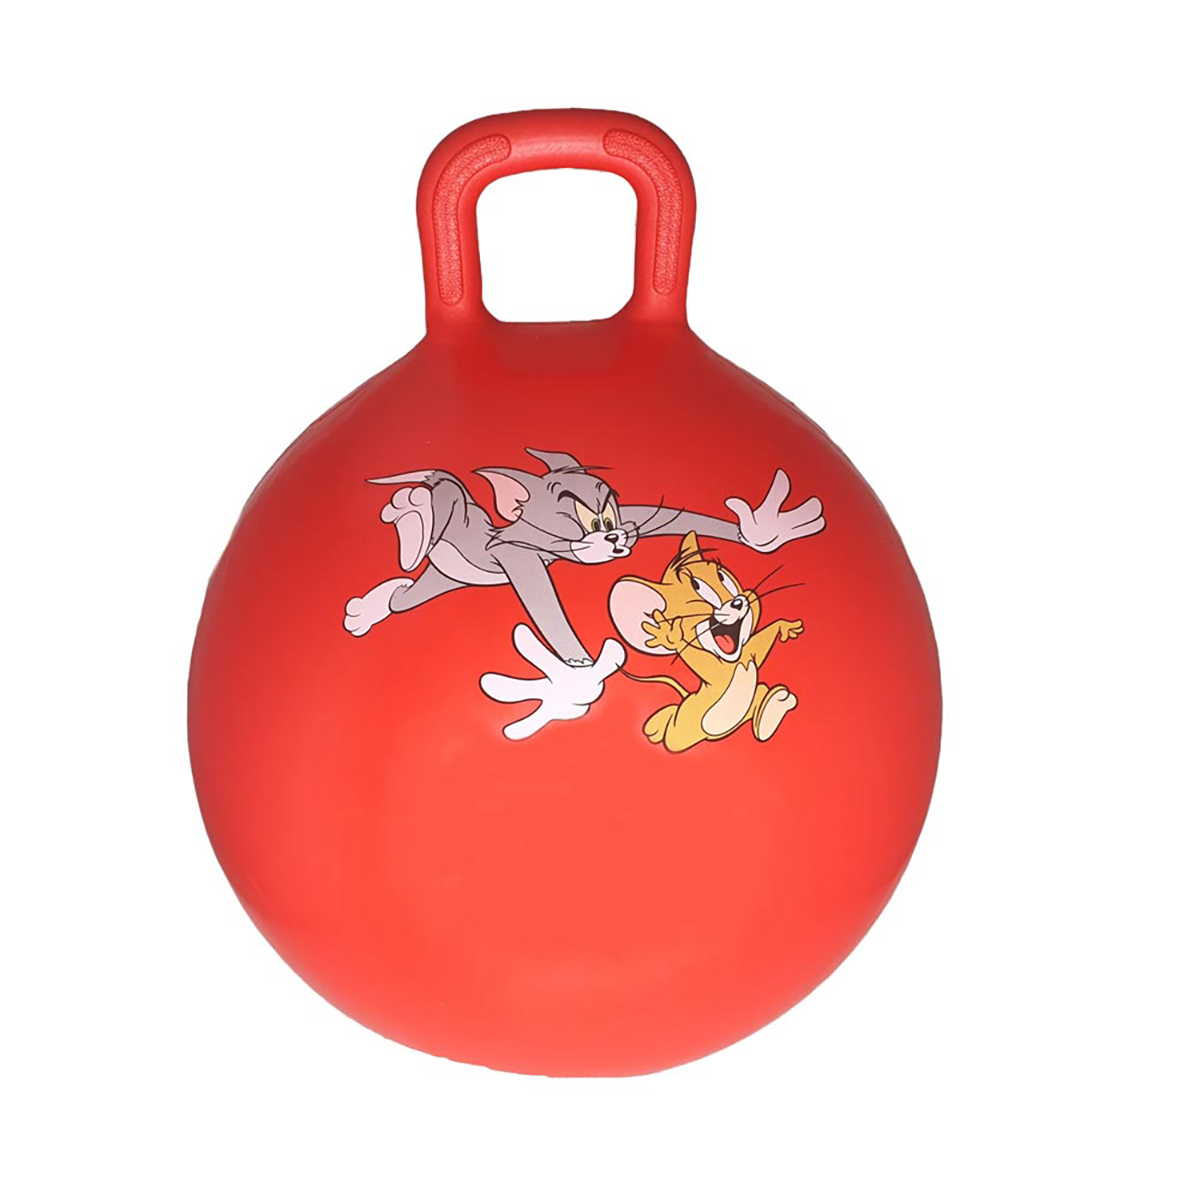 45 rot cm Hüpfball Spielset und Tom Jerry, mehrfarbig NOON